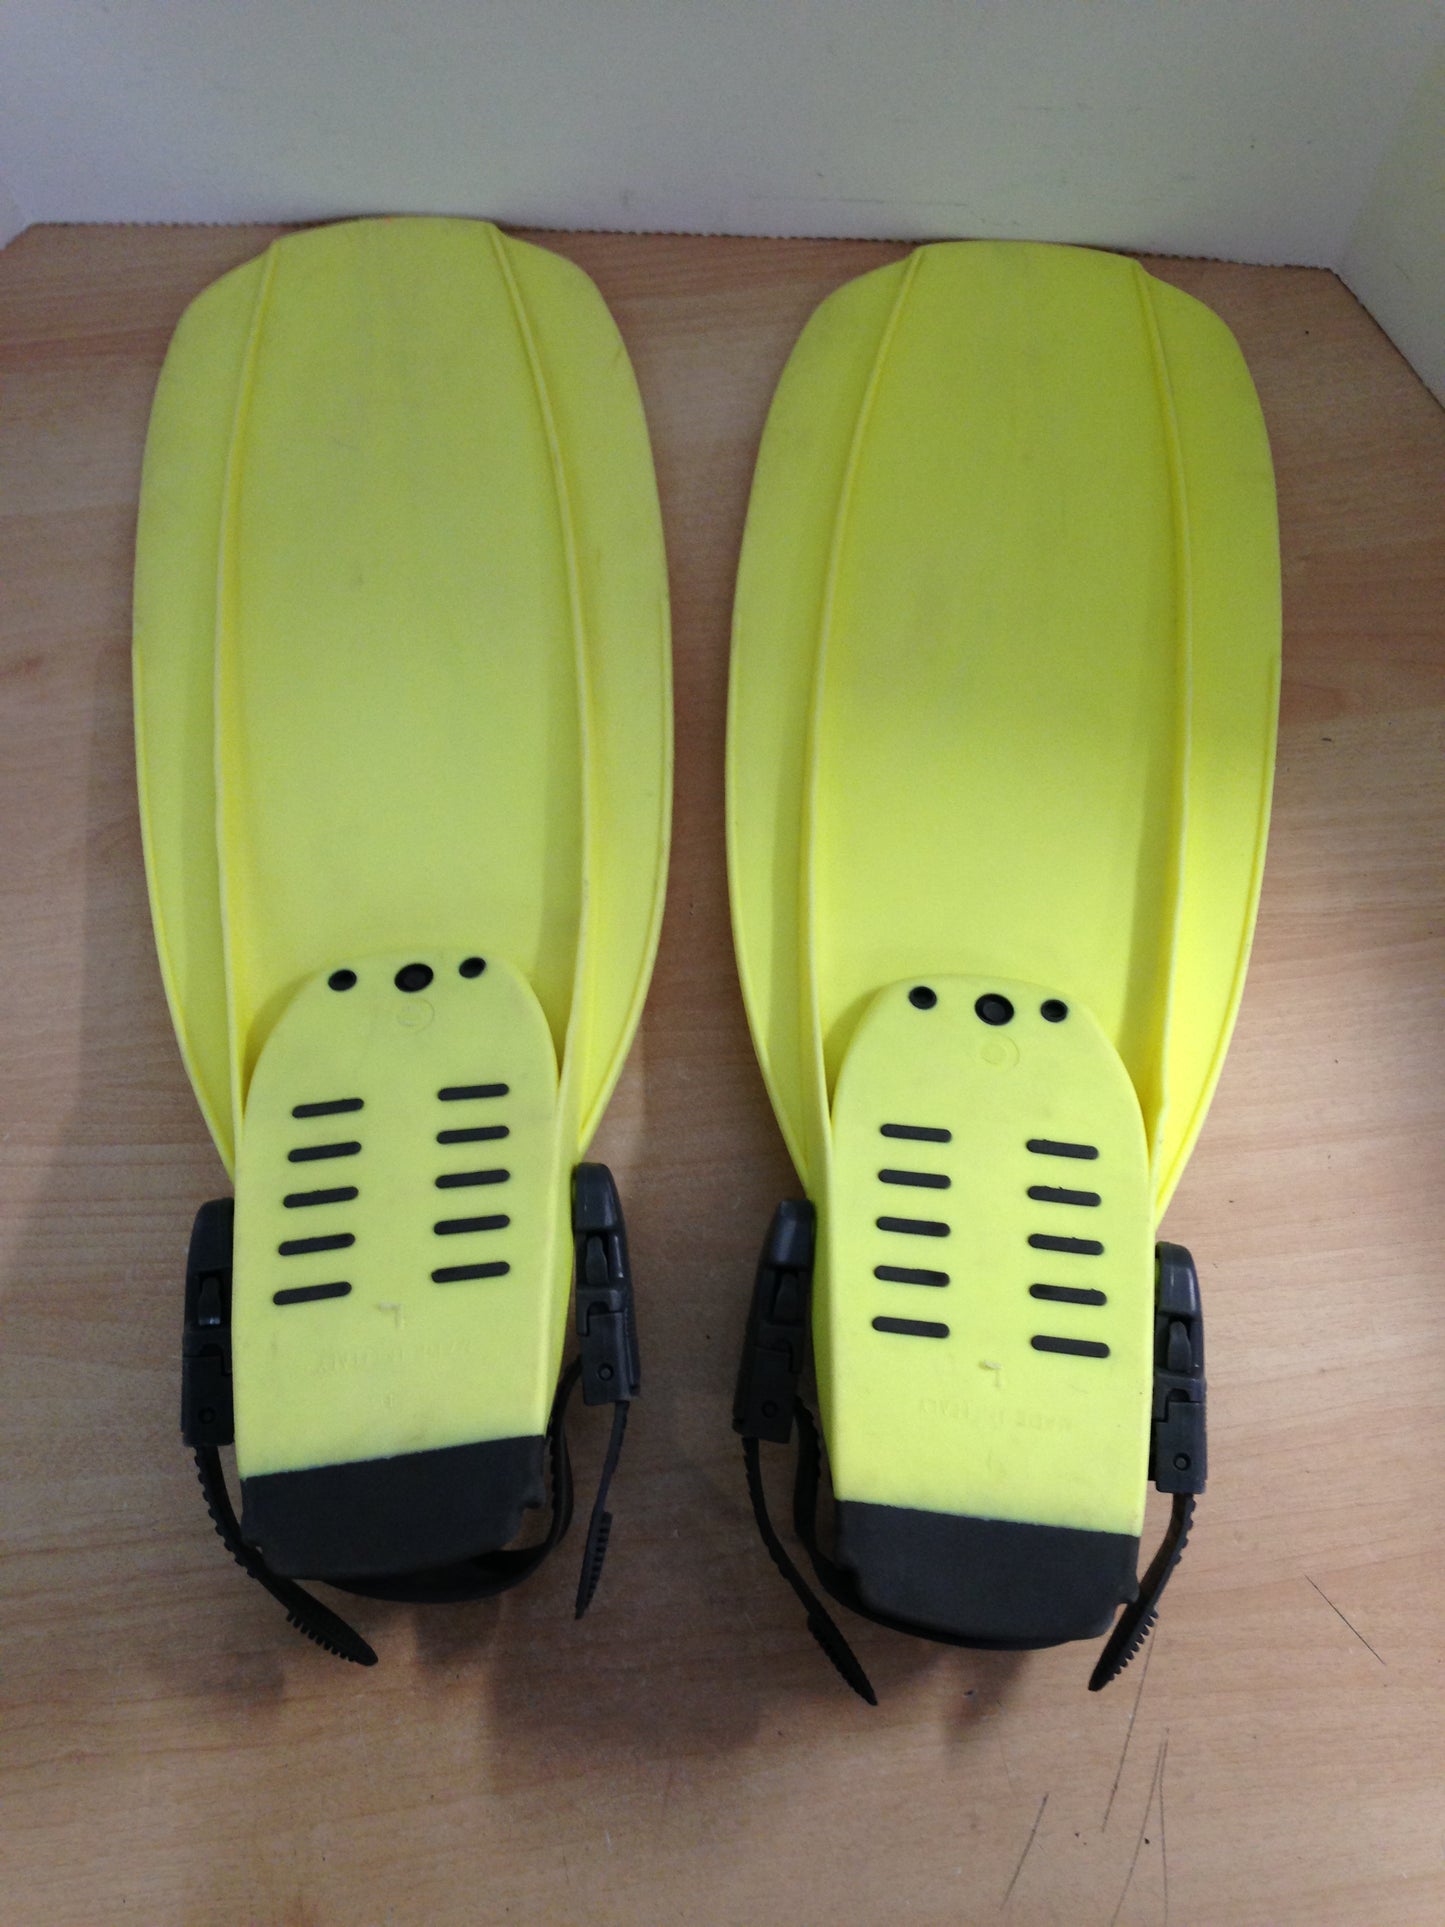 Snorkel Dive Fins Men's Size 9-11 Shoe Dacor Black Yellow Minor Marks Wear